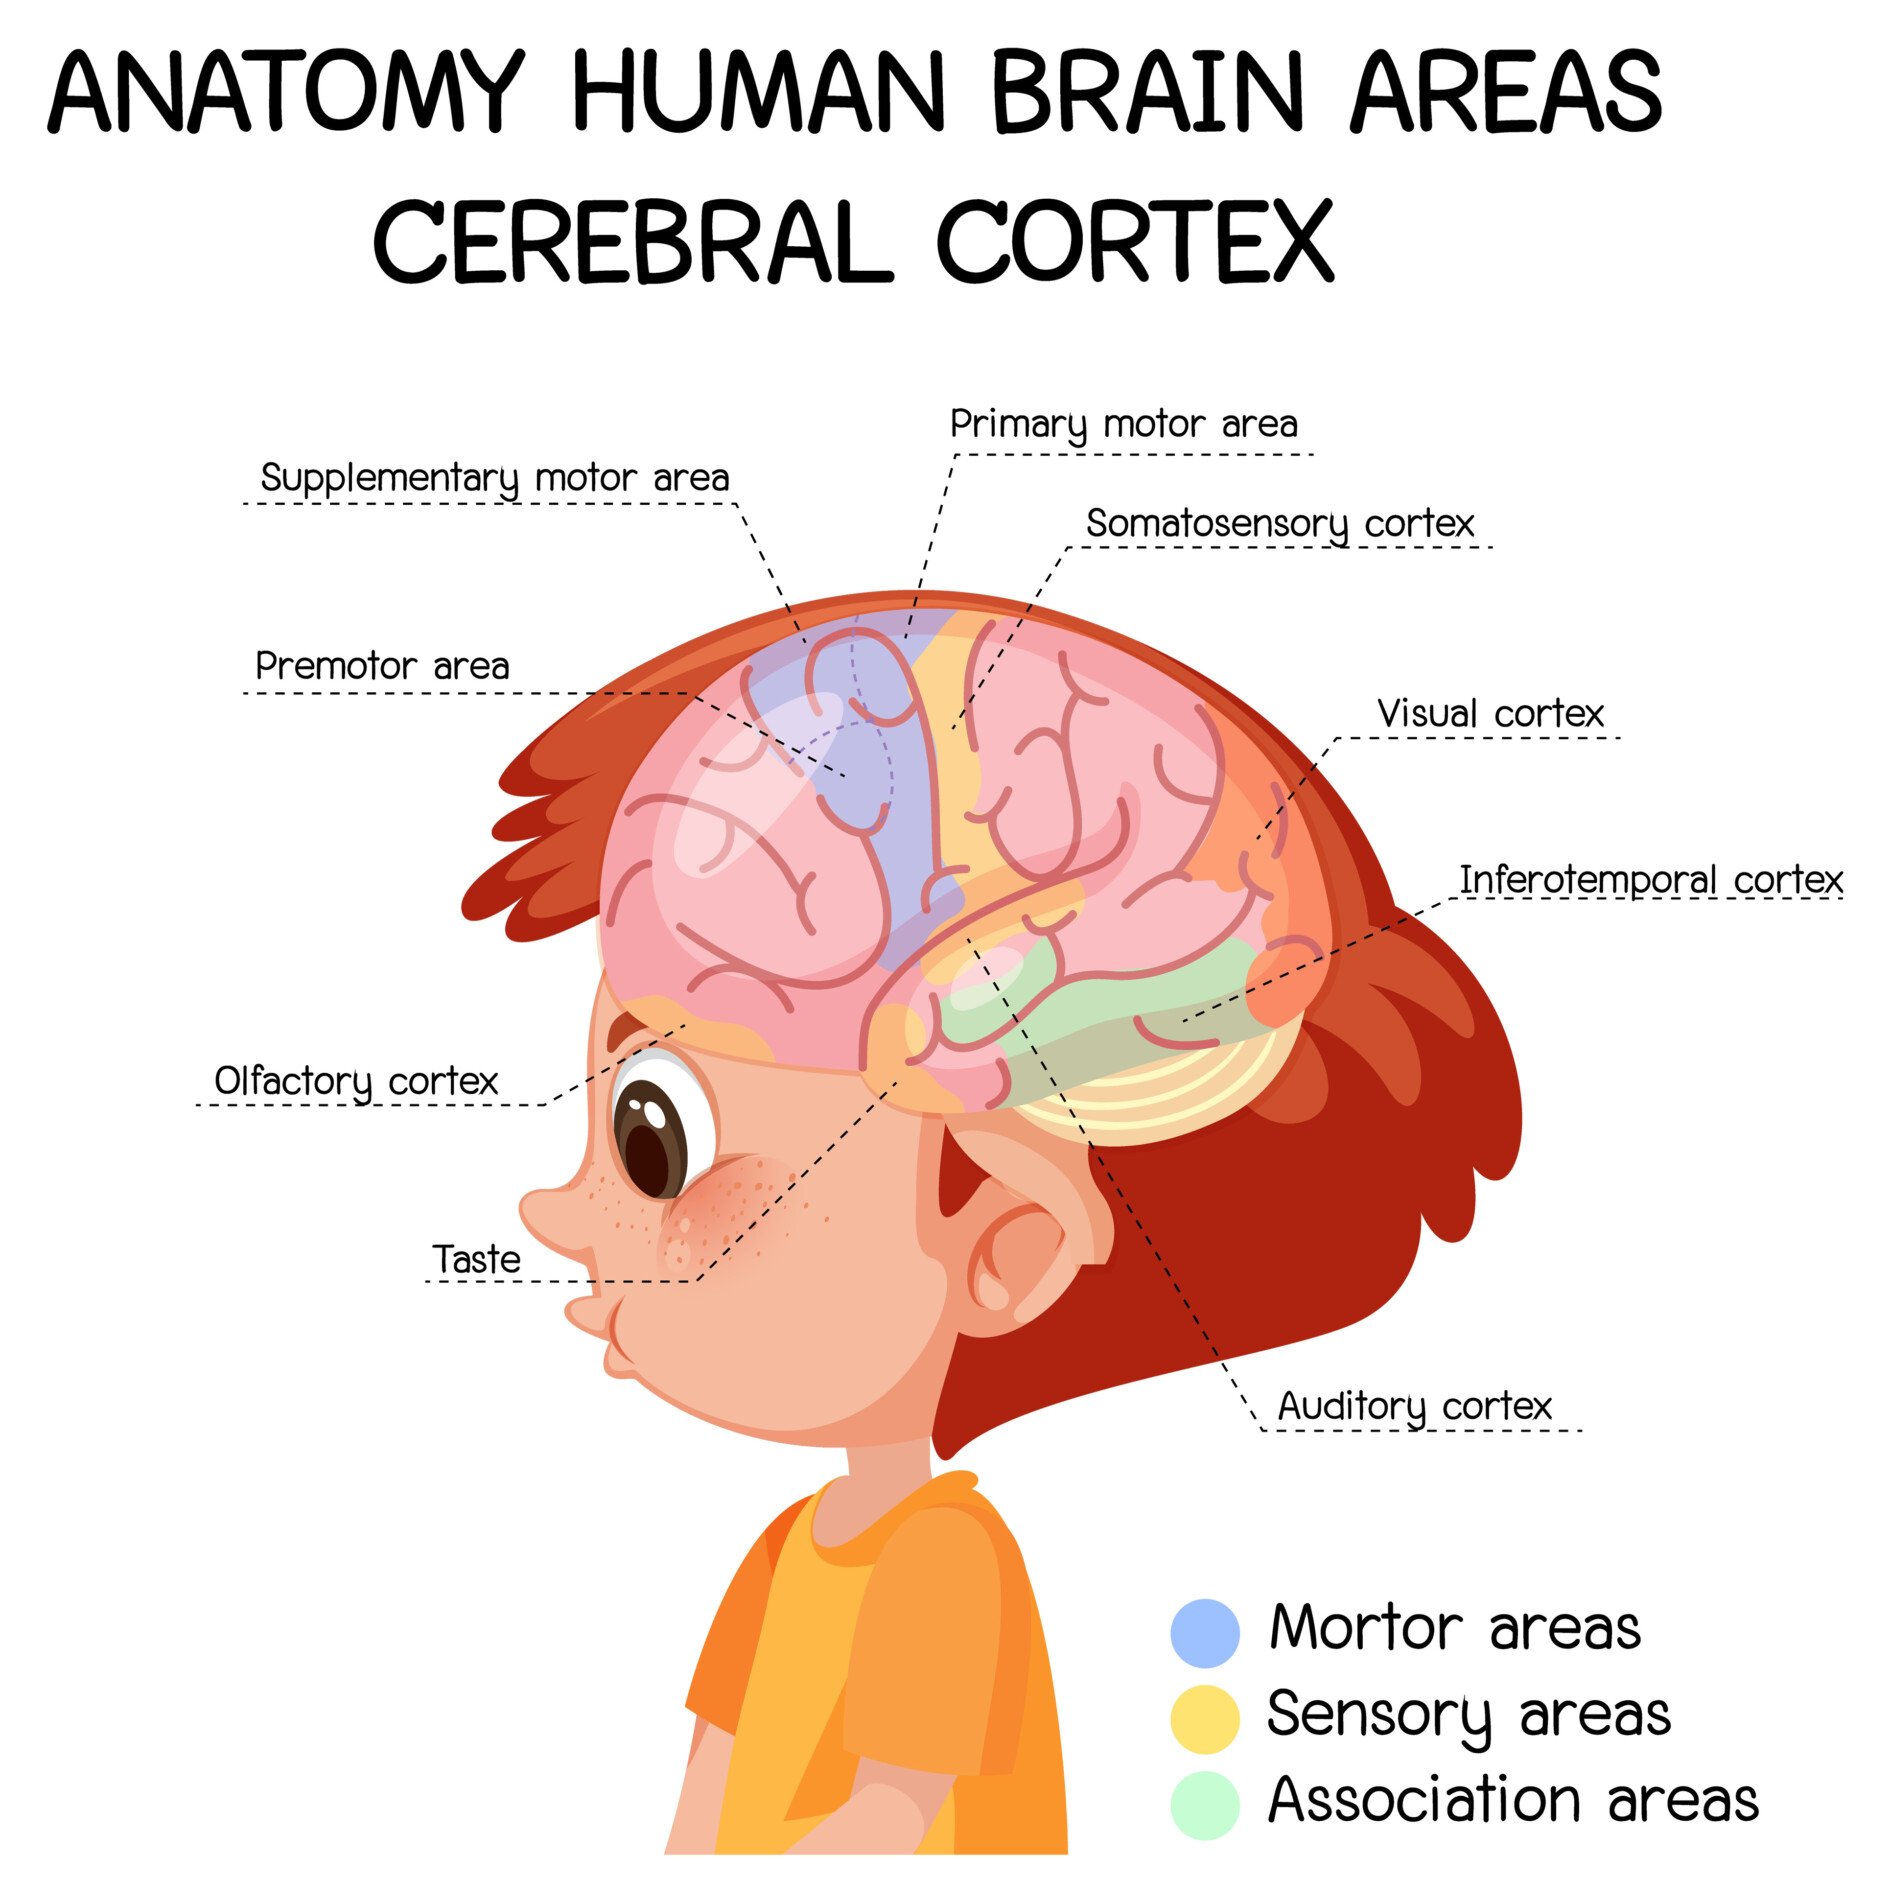 a diagram titled 'anatomy human brain areas cerebral cortex'. each area of the cerebral cortex is labelled